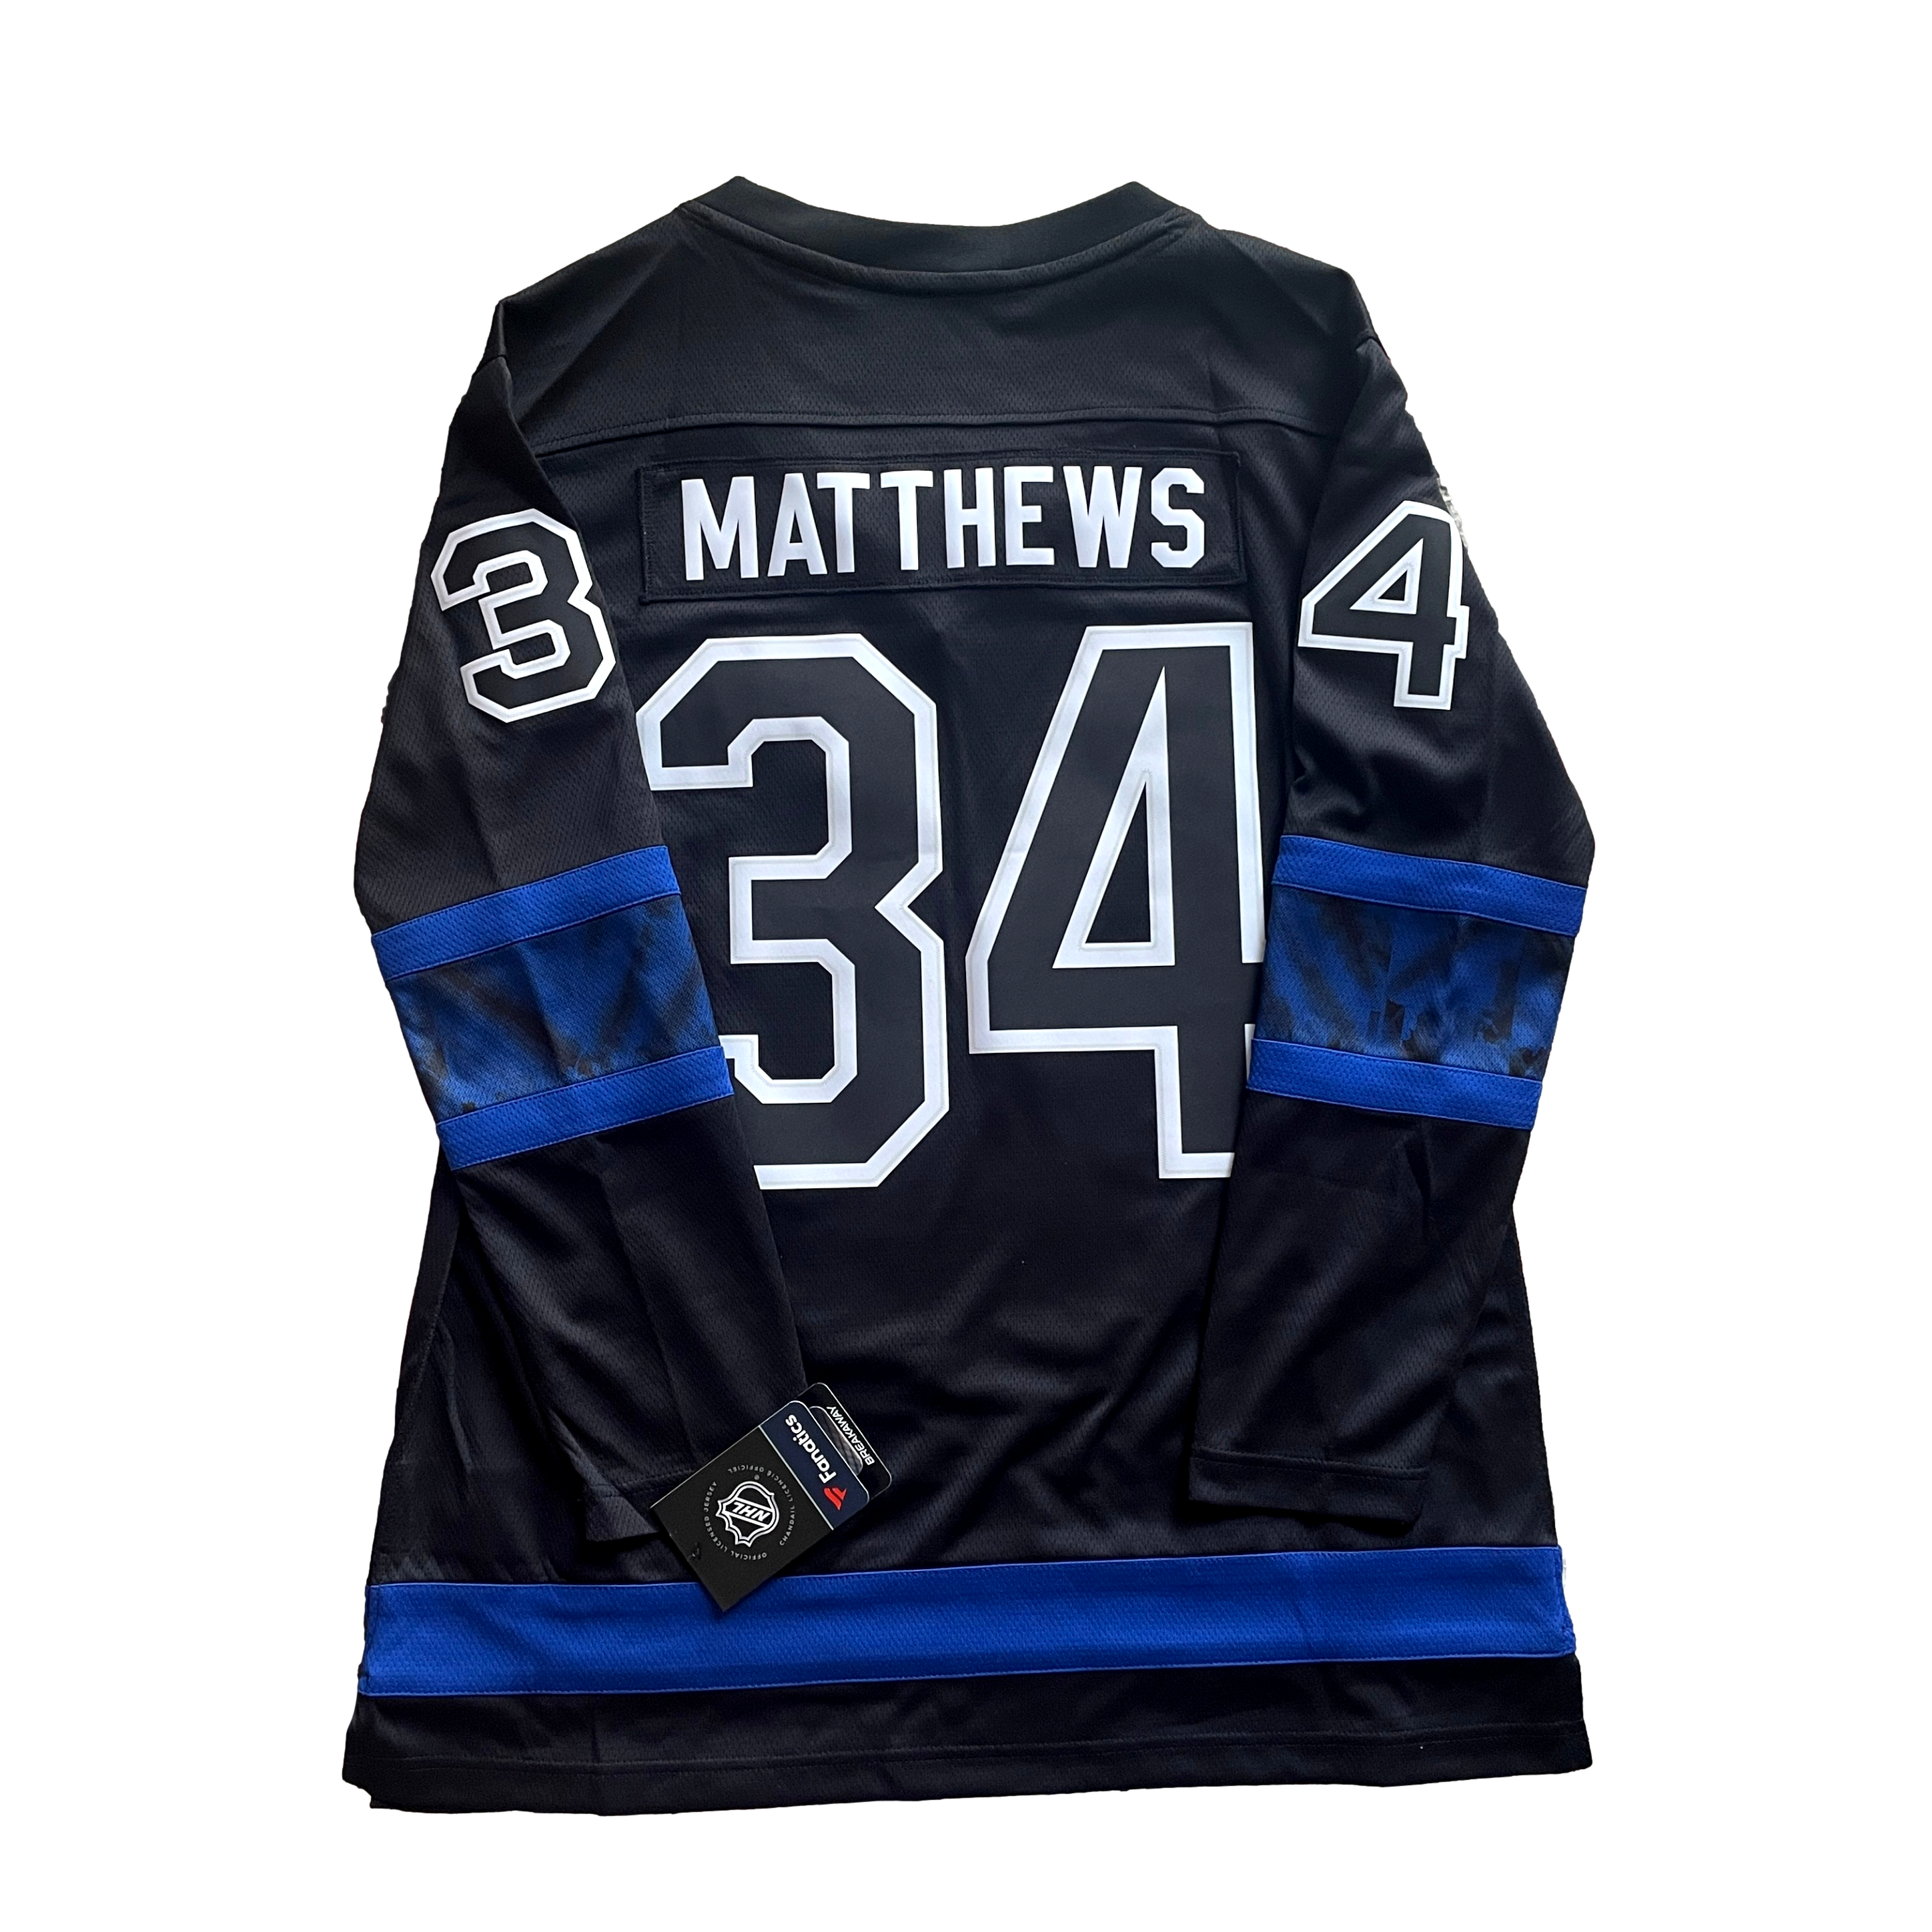 Toronto Maple Leafs NHL Hockey Jersey (W XL)